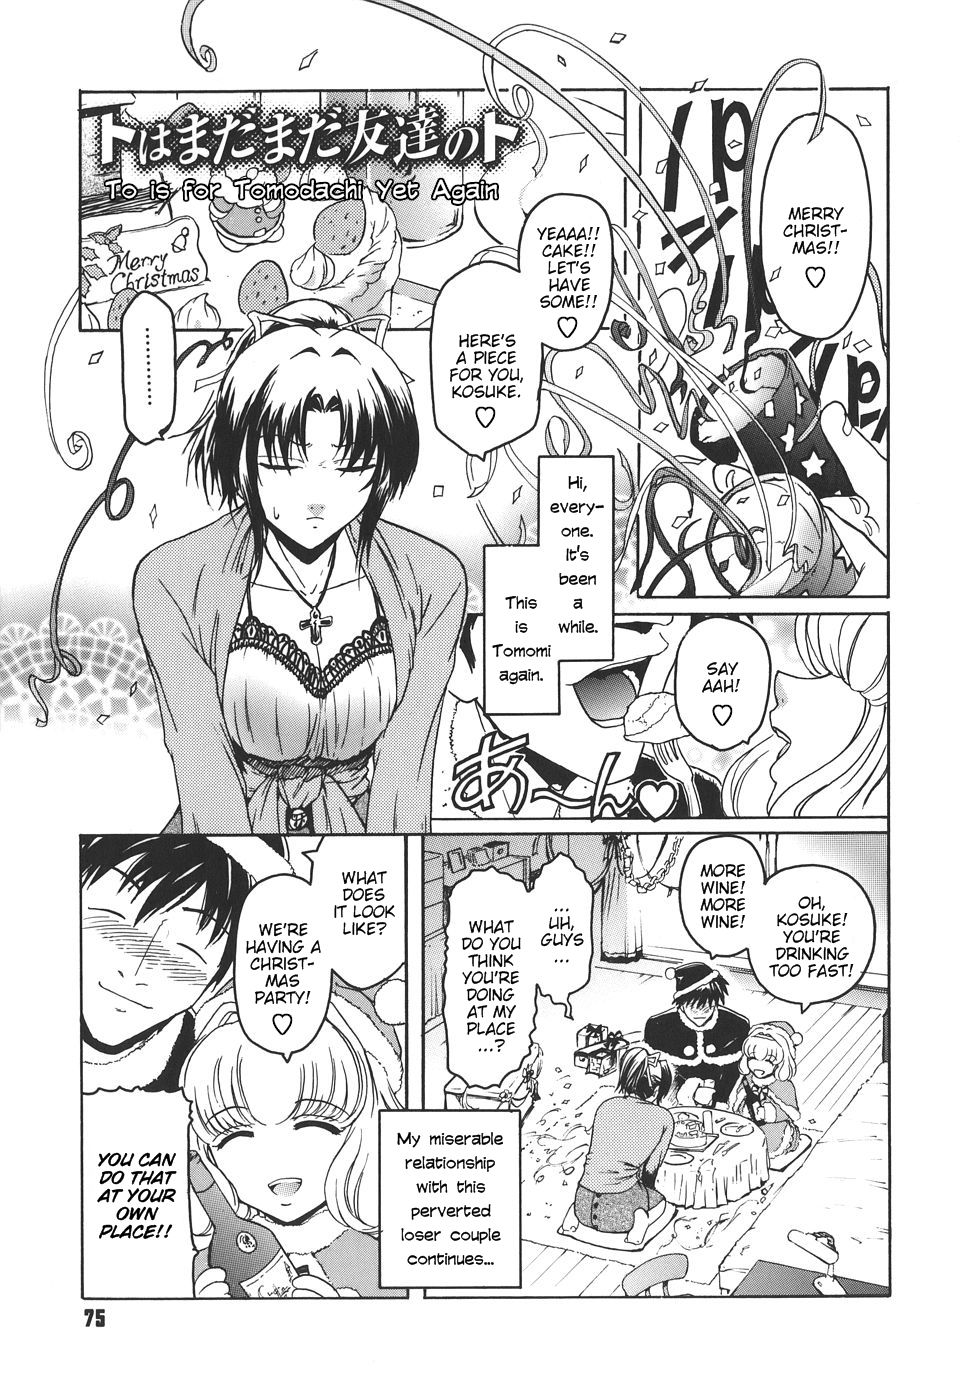 Hentai Manga Comic-Virgin-Chapter 4 - to is for tomodachi yet again-1